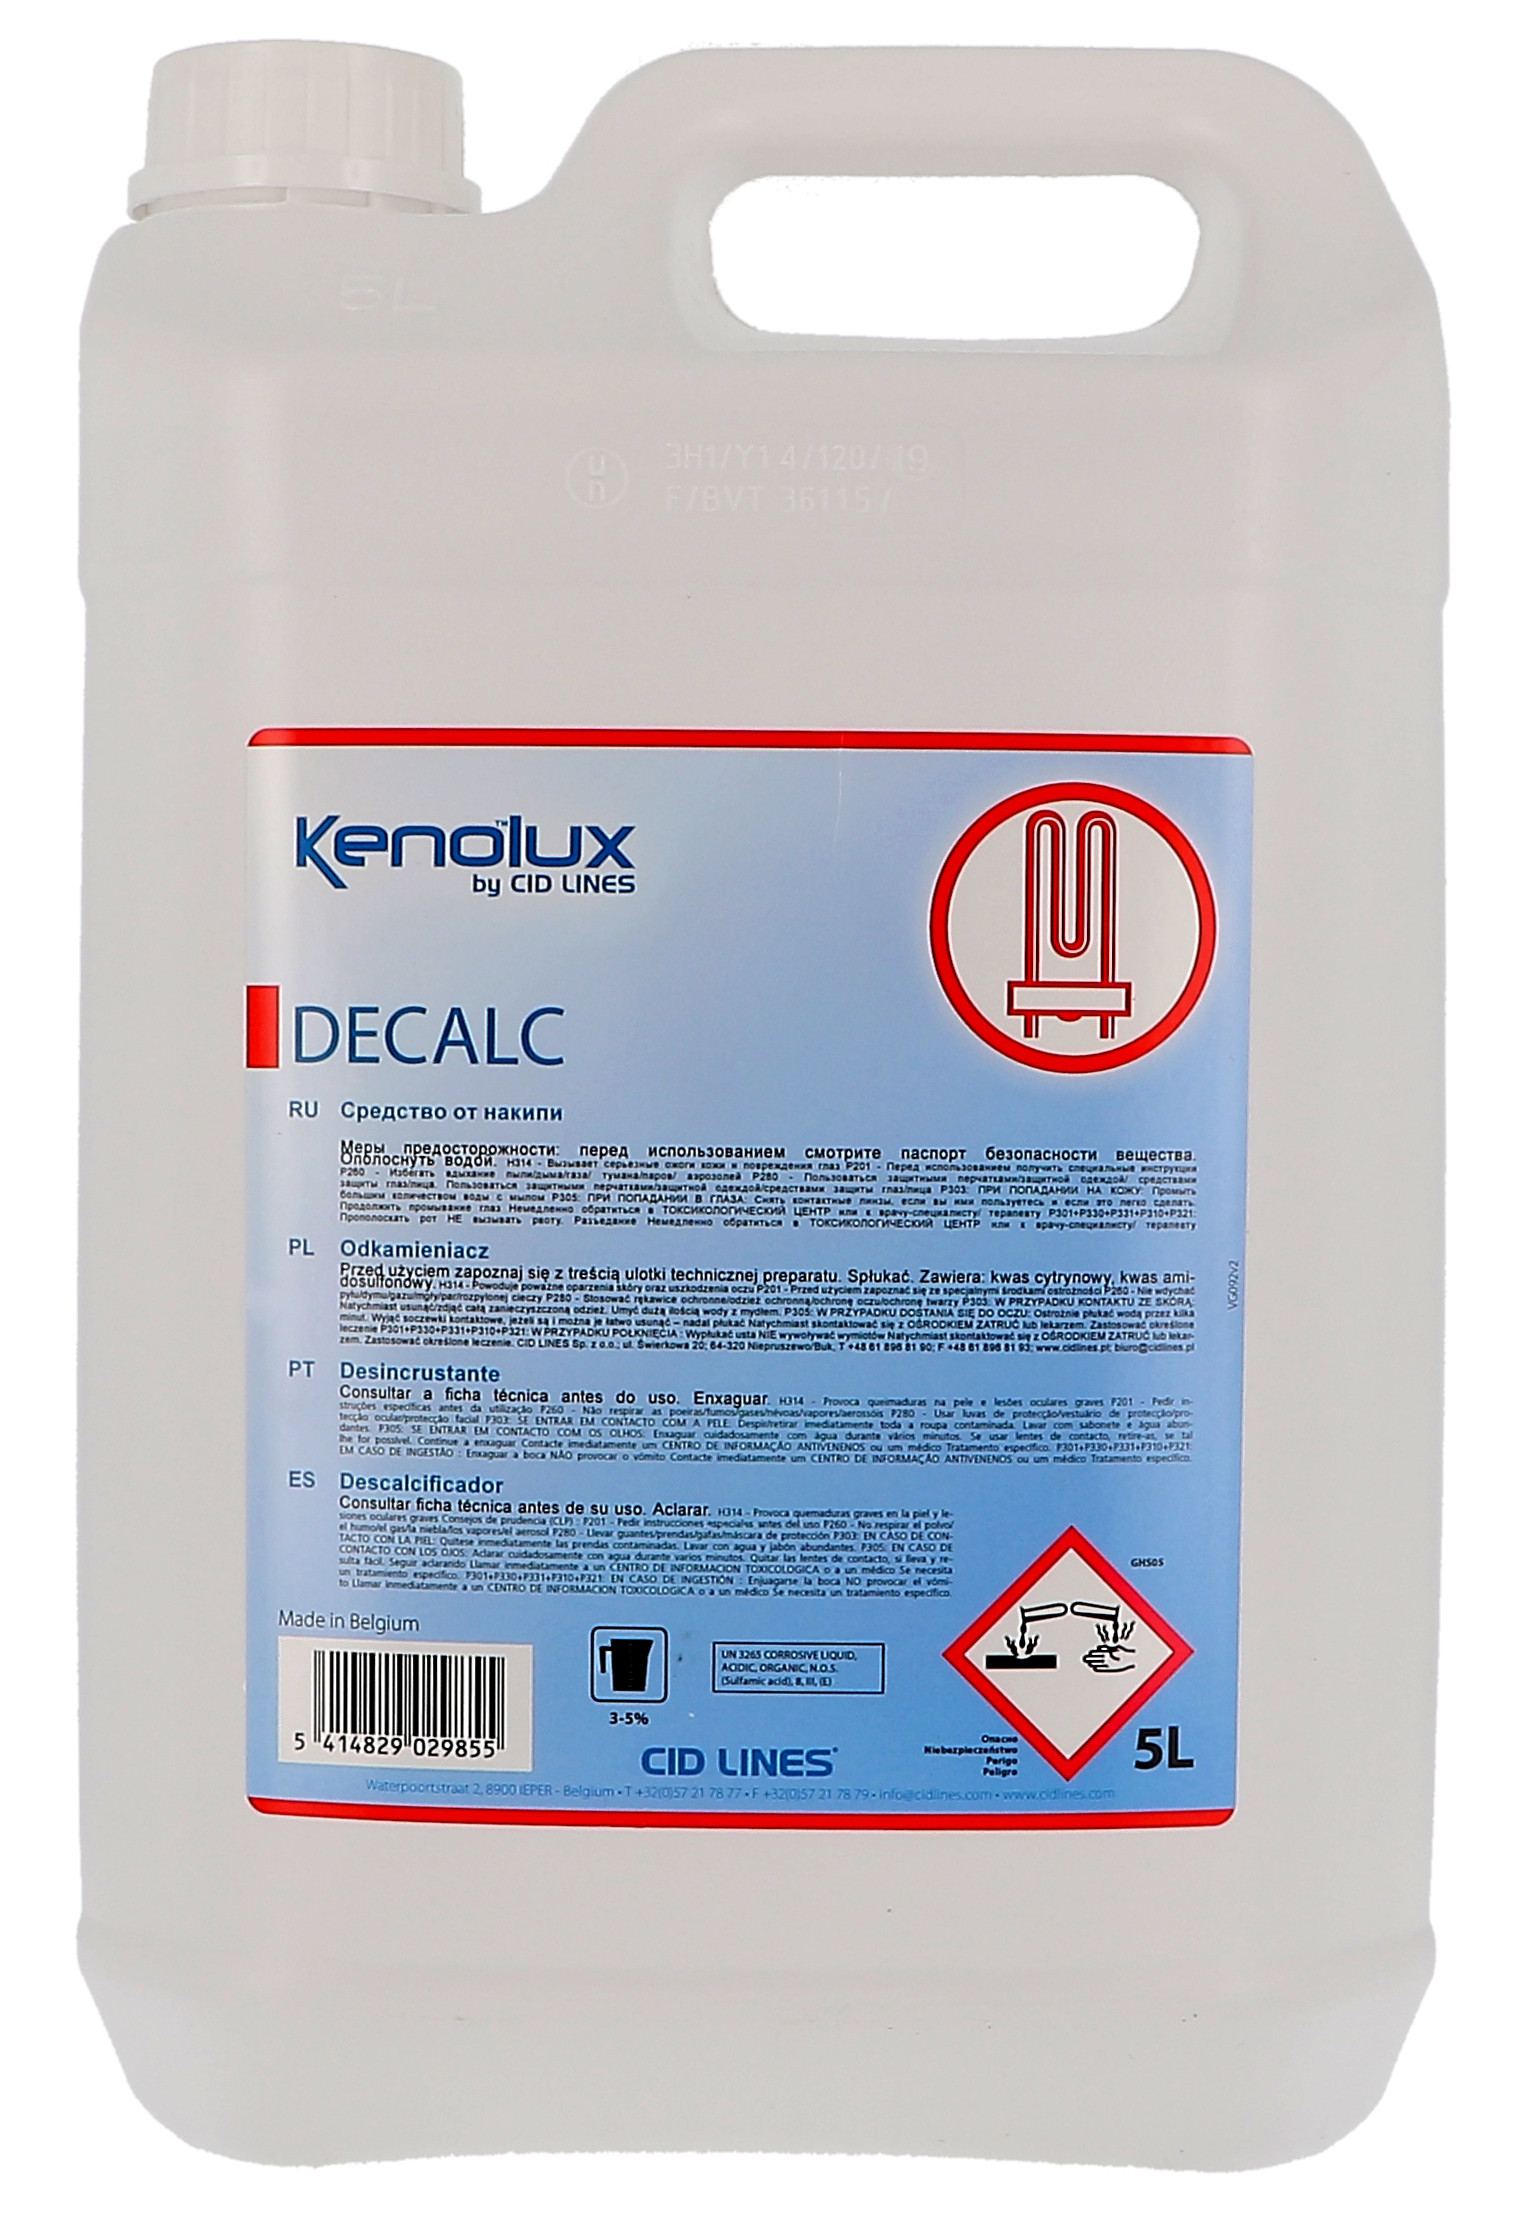 Kenolux Decalc 5L CID Lines 